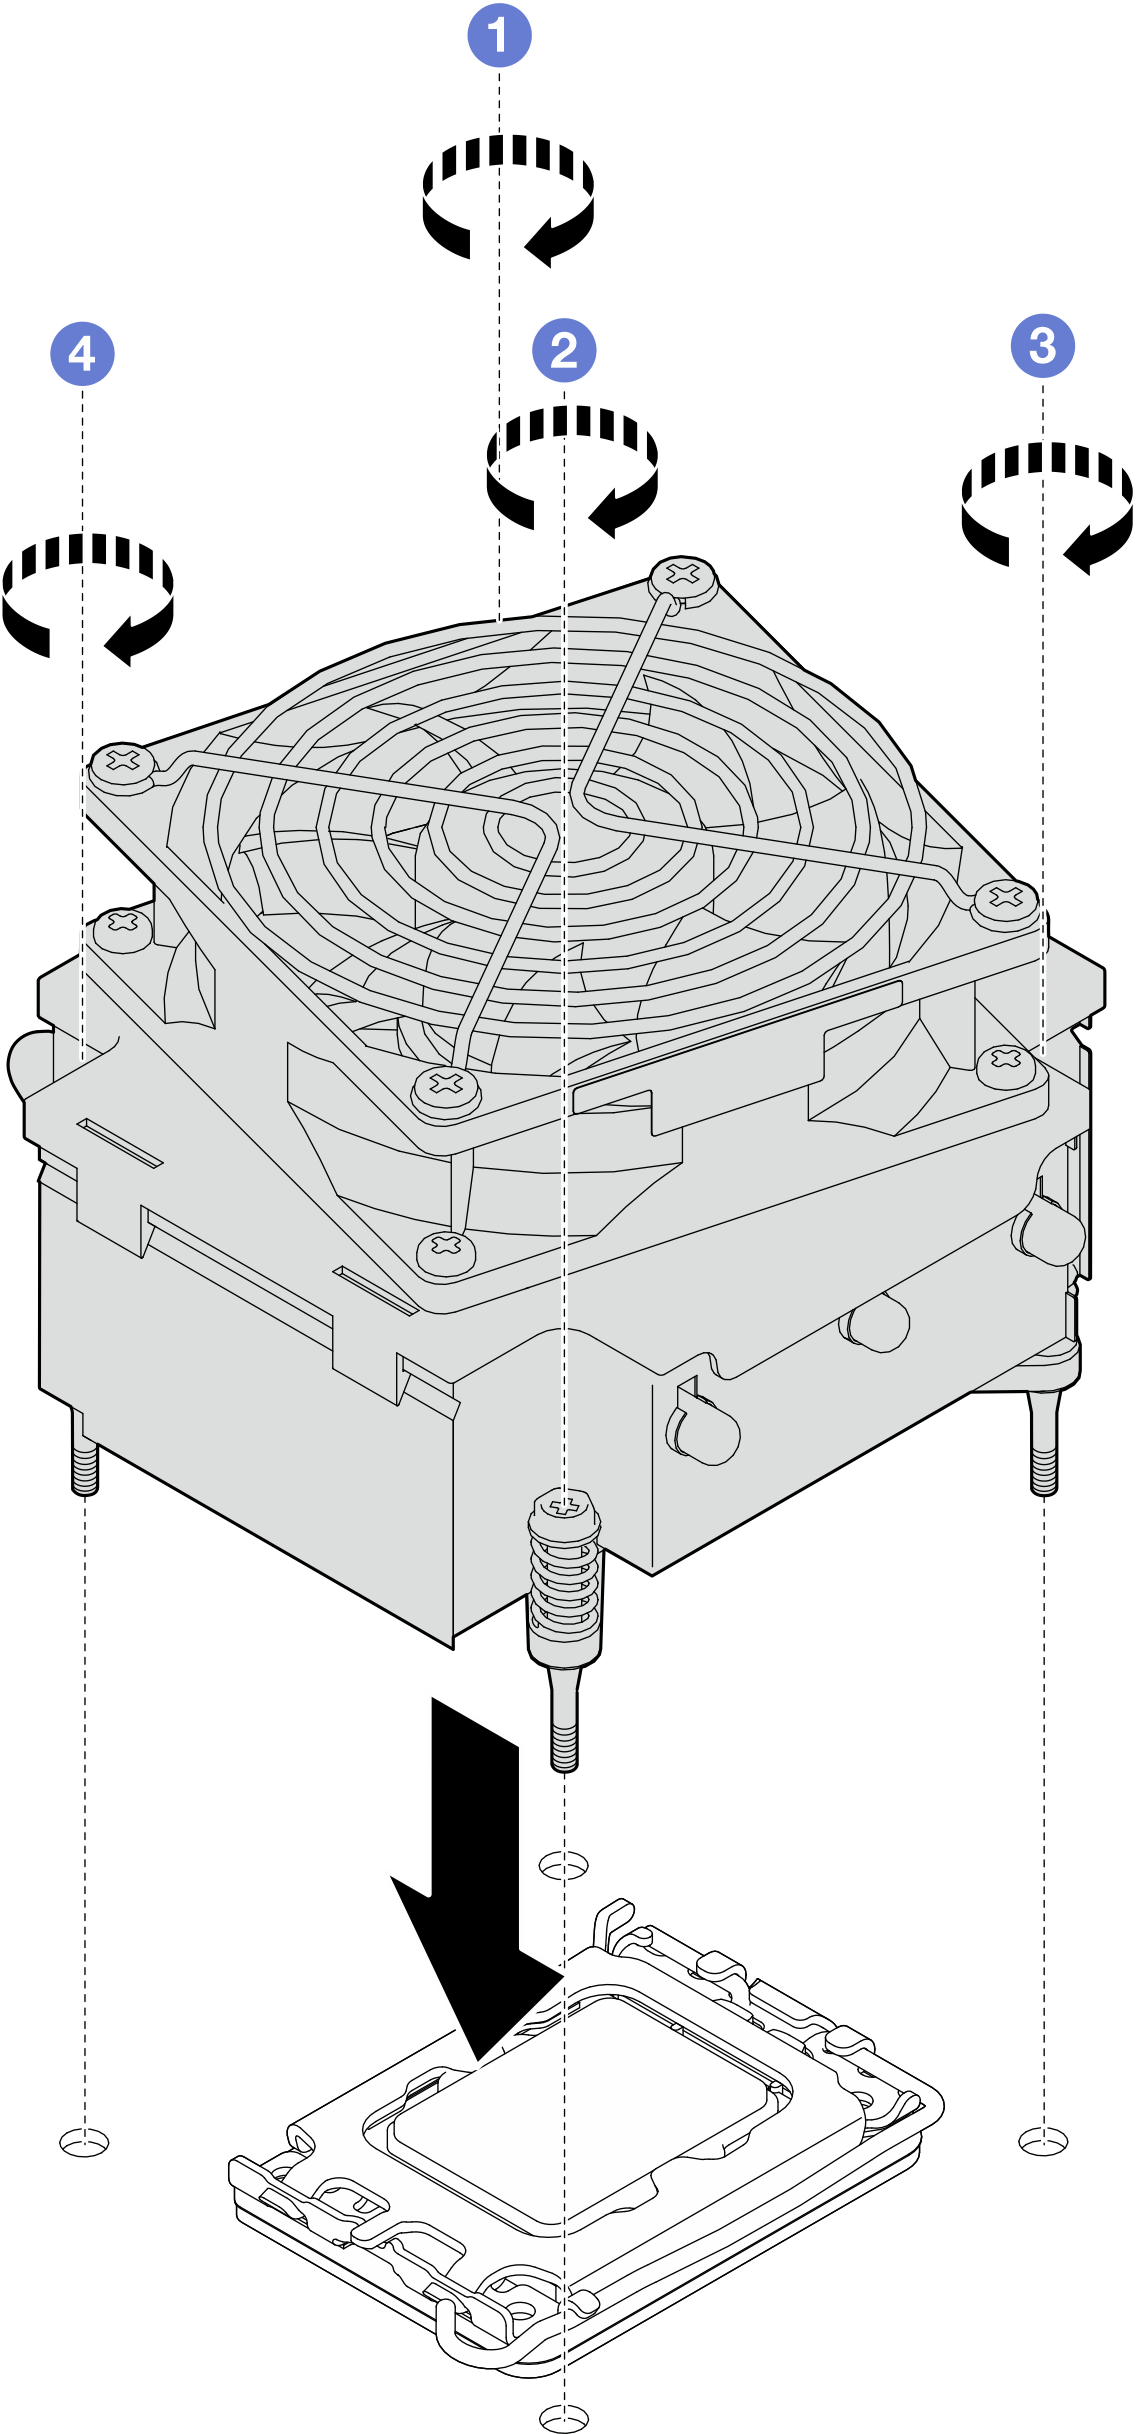 Installing the heat sink and the fan module